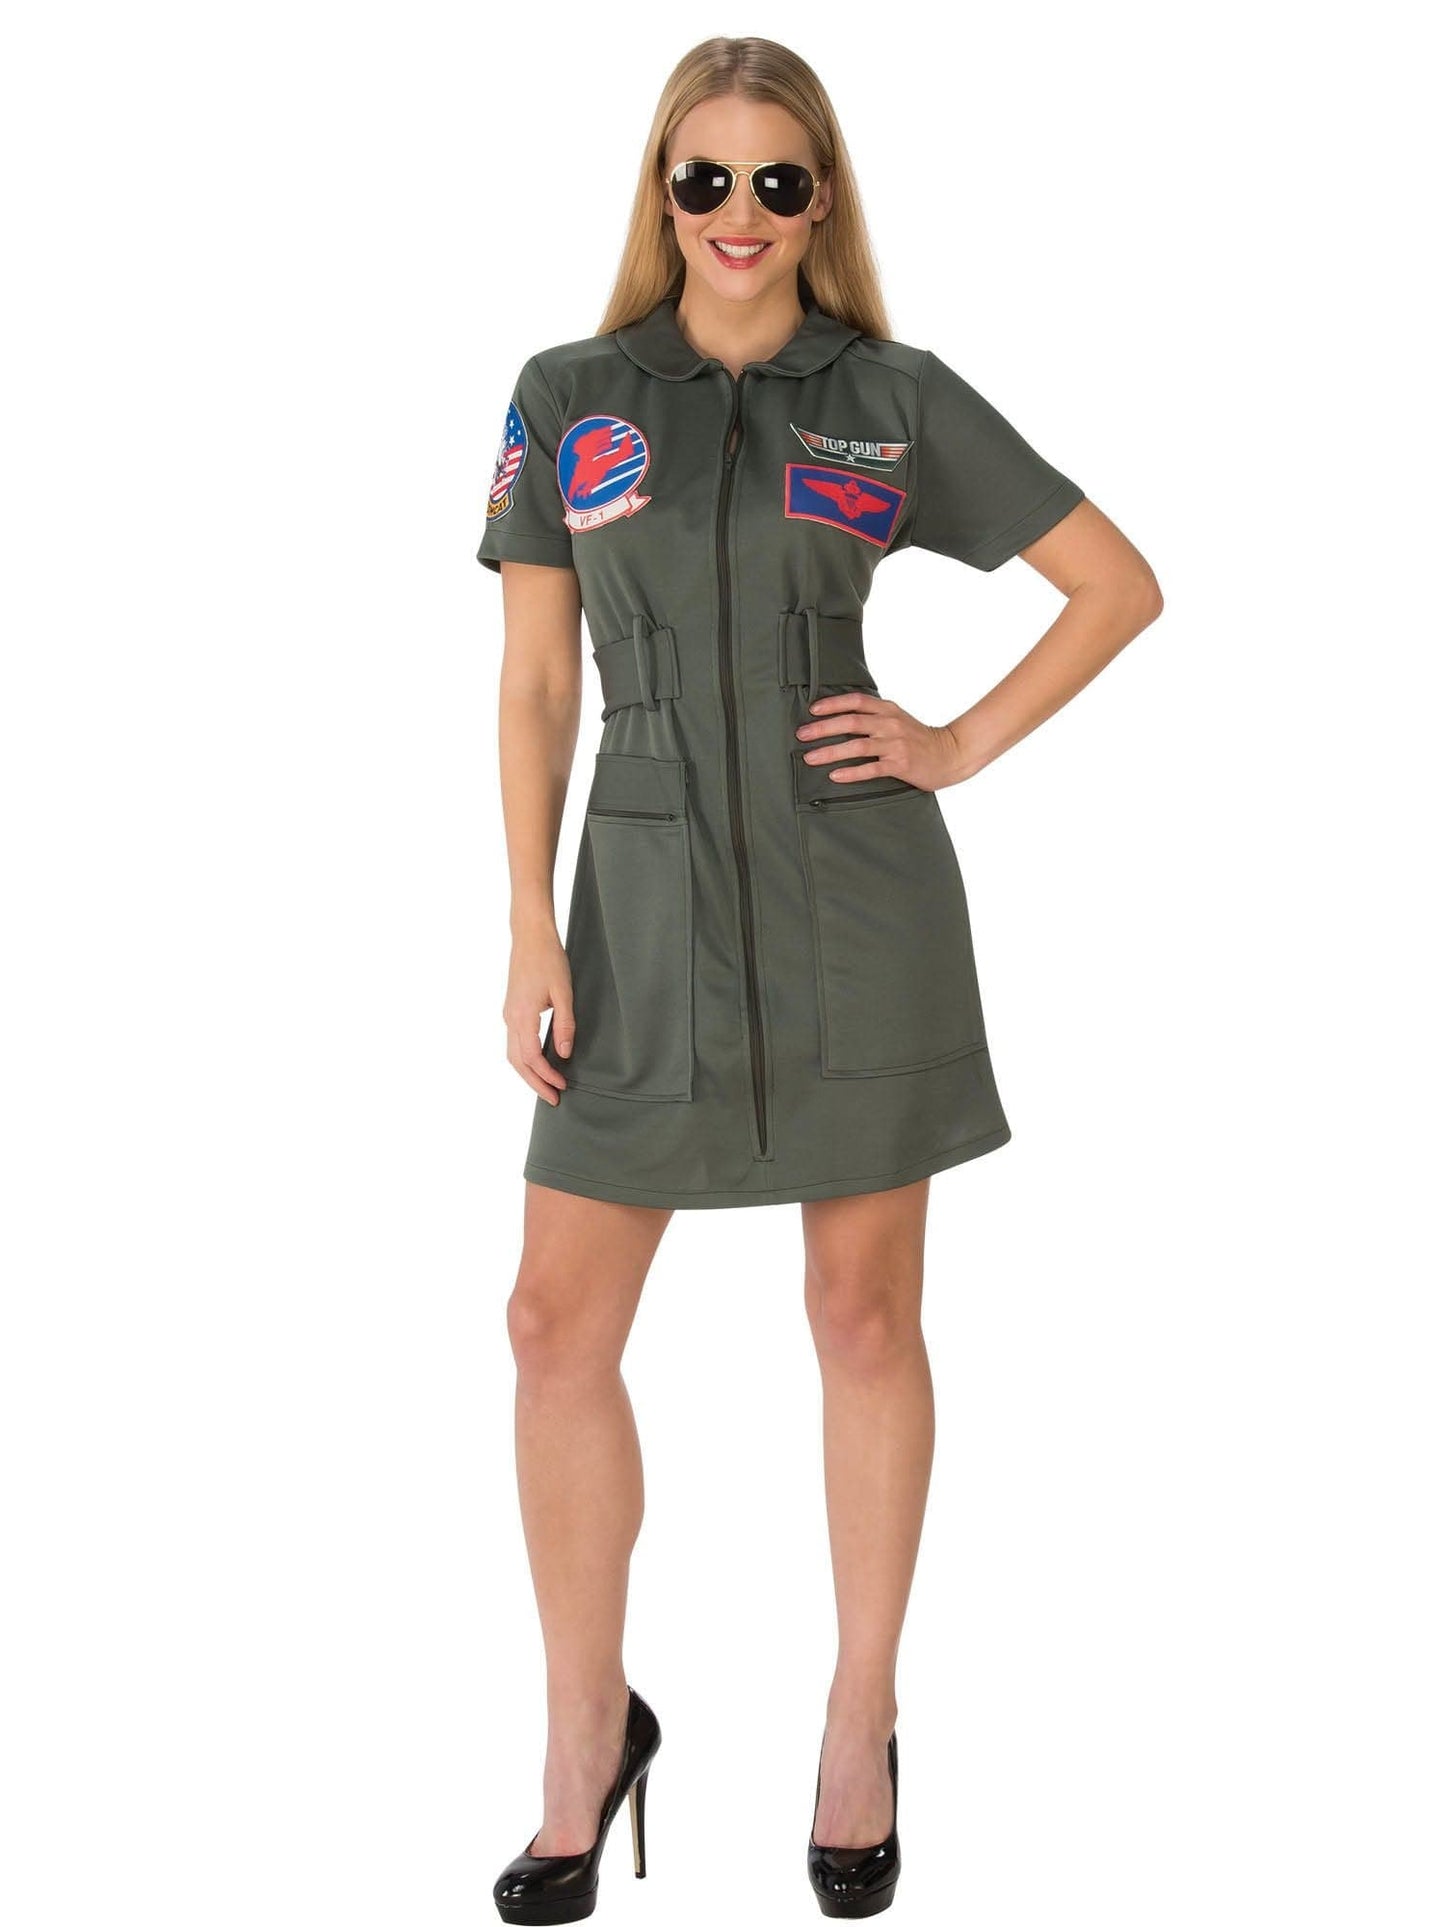 Top Gun Women's Costume